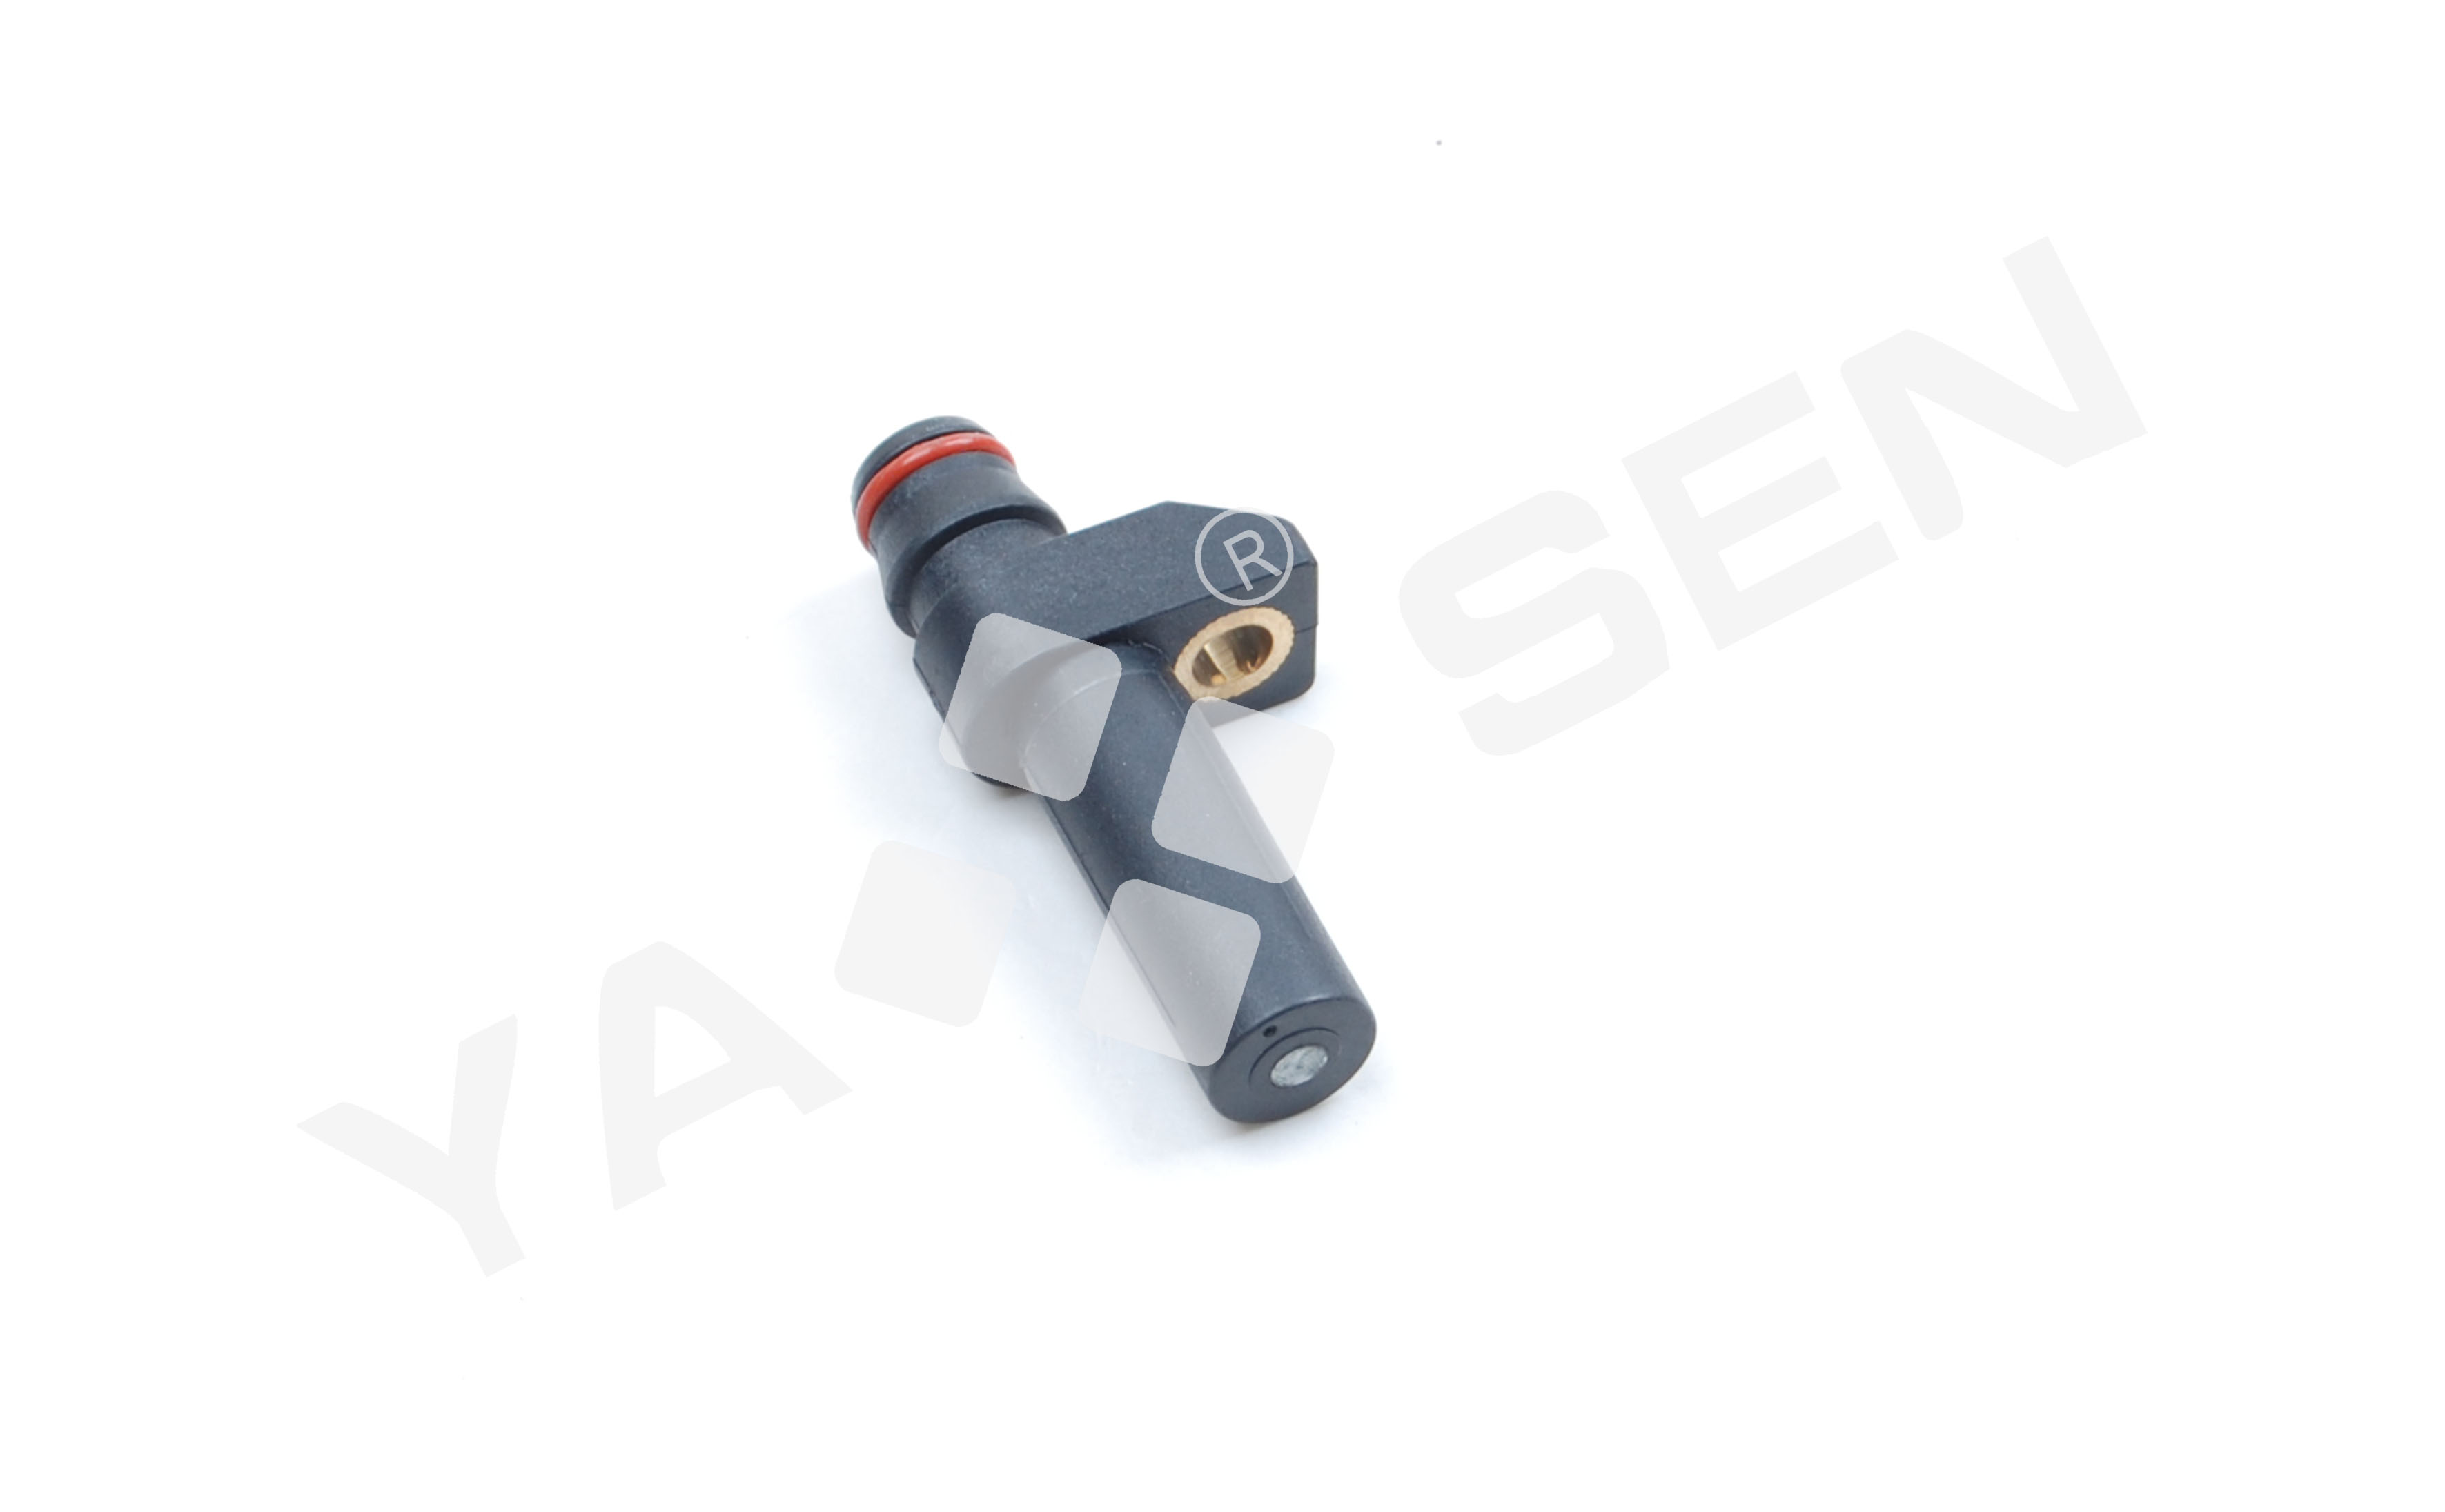 Crankshaft Position Sensor for Mercedes Benz, 0031537228 0031537428 CRK40 0281002124  PC474  5S1836  SU4738  CSS974 A